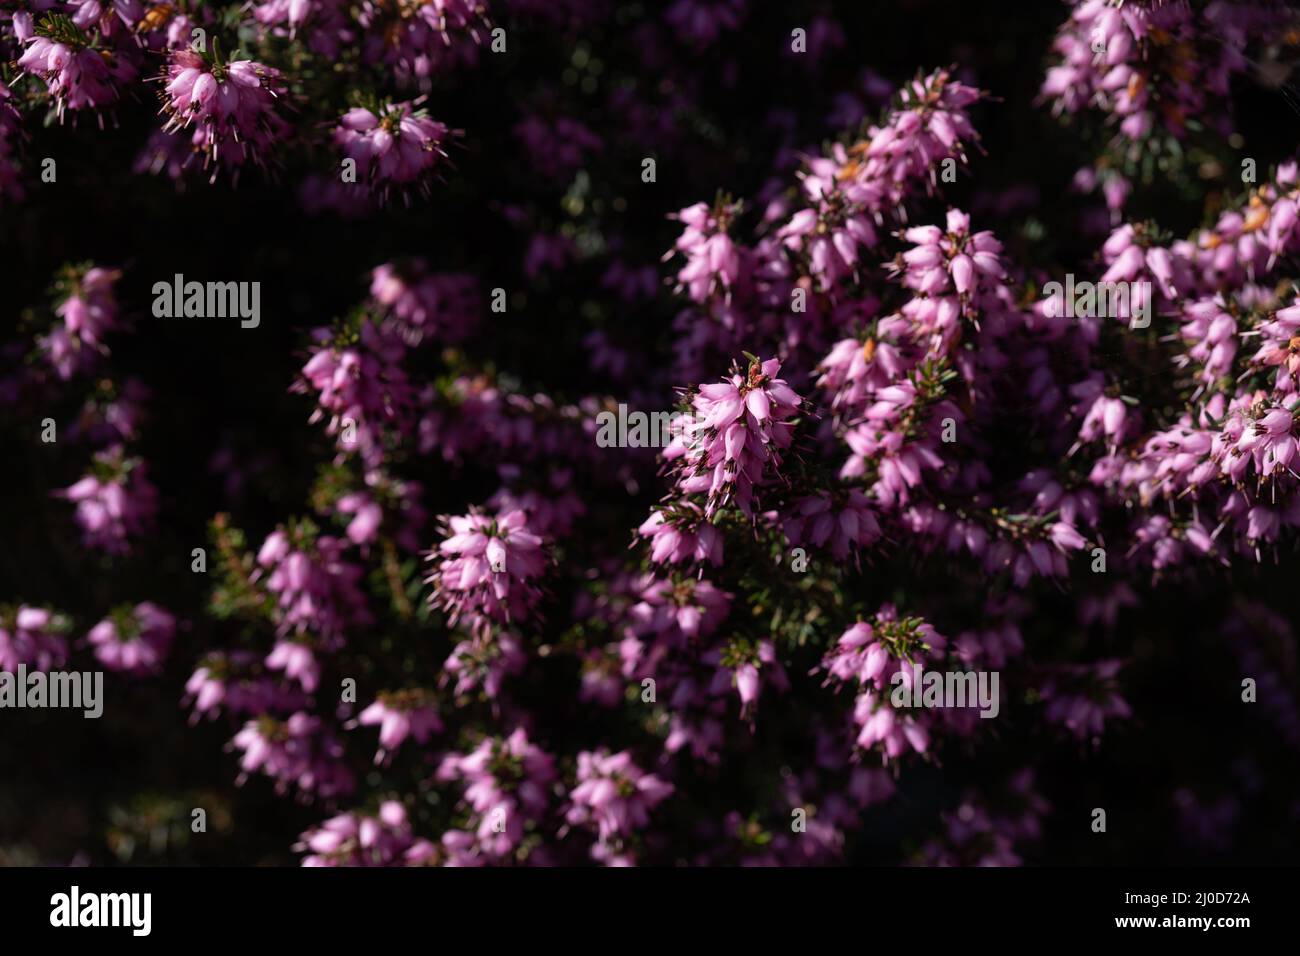 Winter heath (E. carnea or Erica carnea), a flowering heather plant native to mountainous areas of southern Europe. Stock Photo